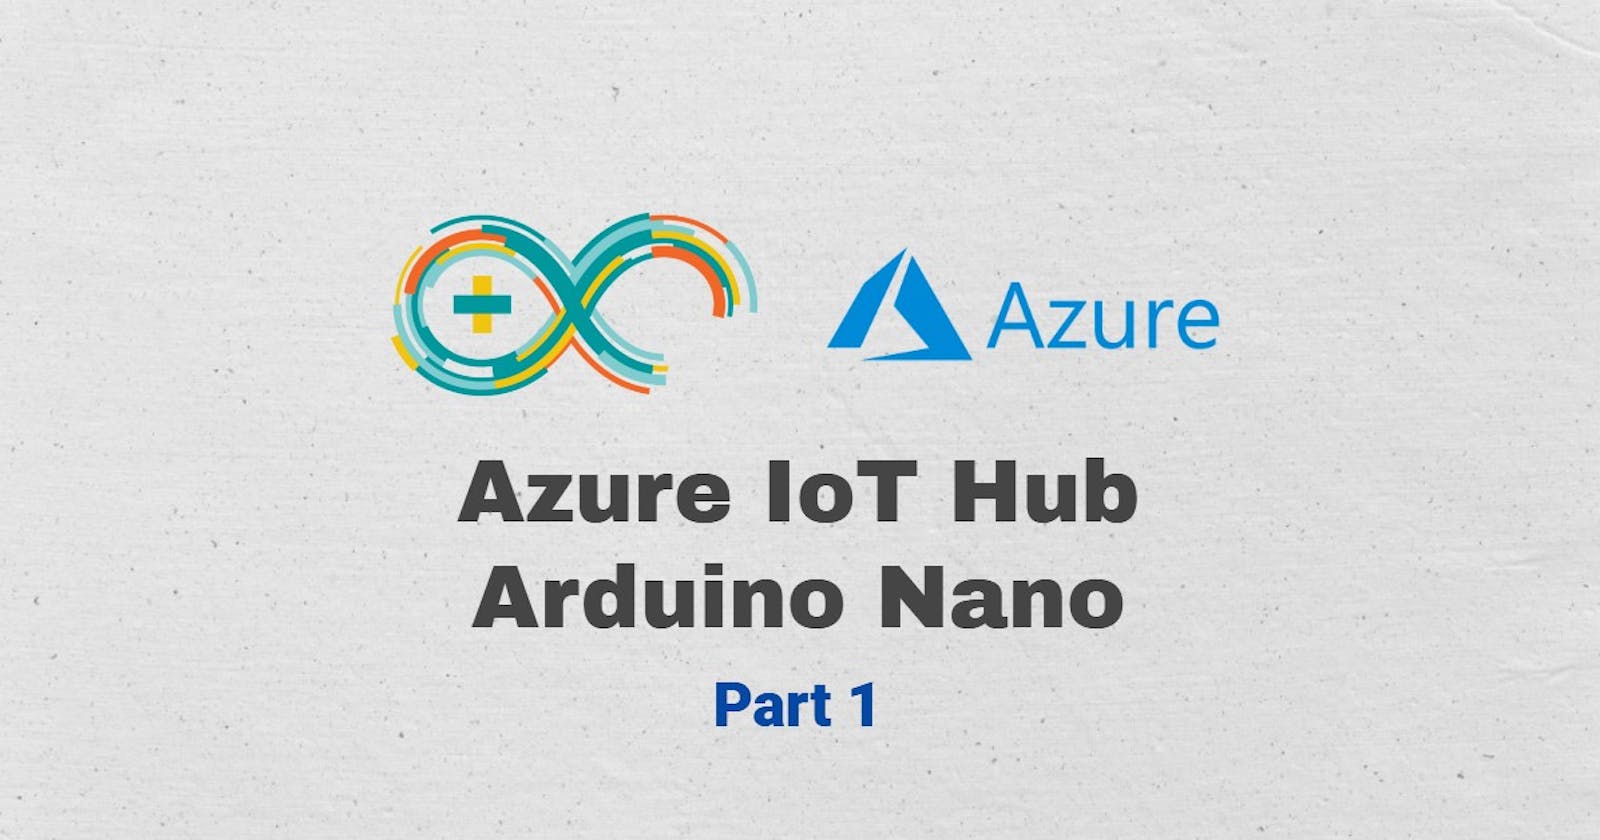 Build a room temperature monitor using Azure and Arduino Nano - Part 1